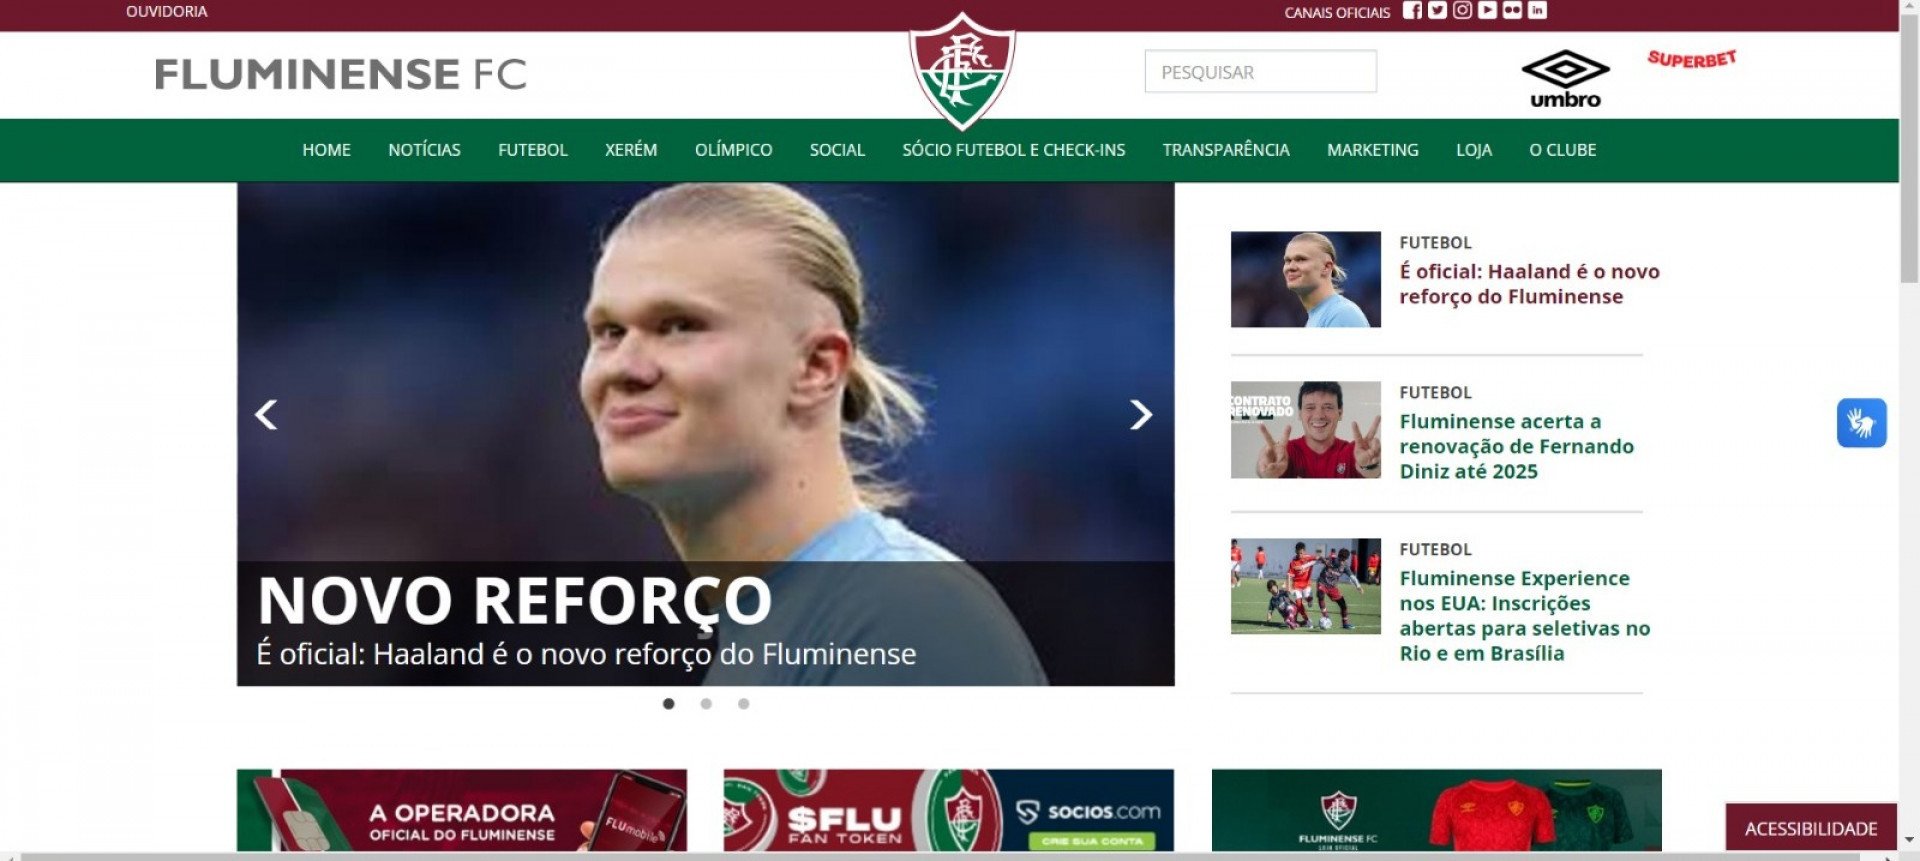 Hacker anuncia Haaland no Fluminense - Reprodução/Site do Fluminense